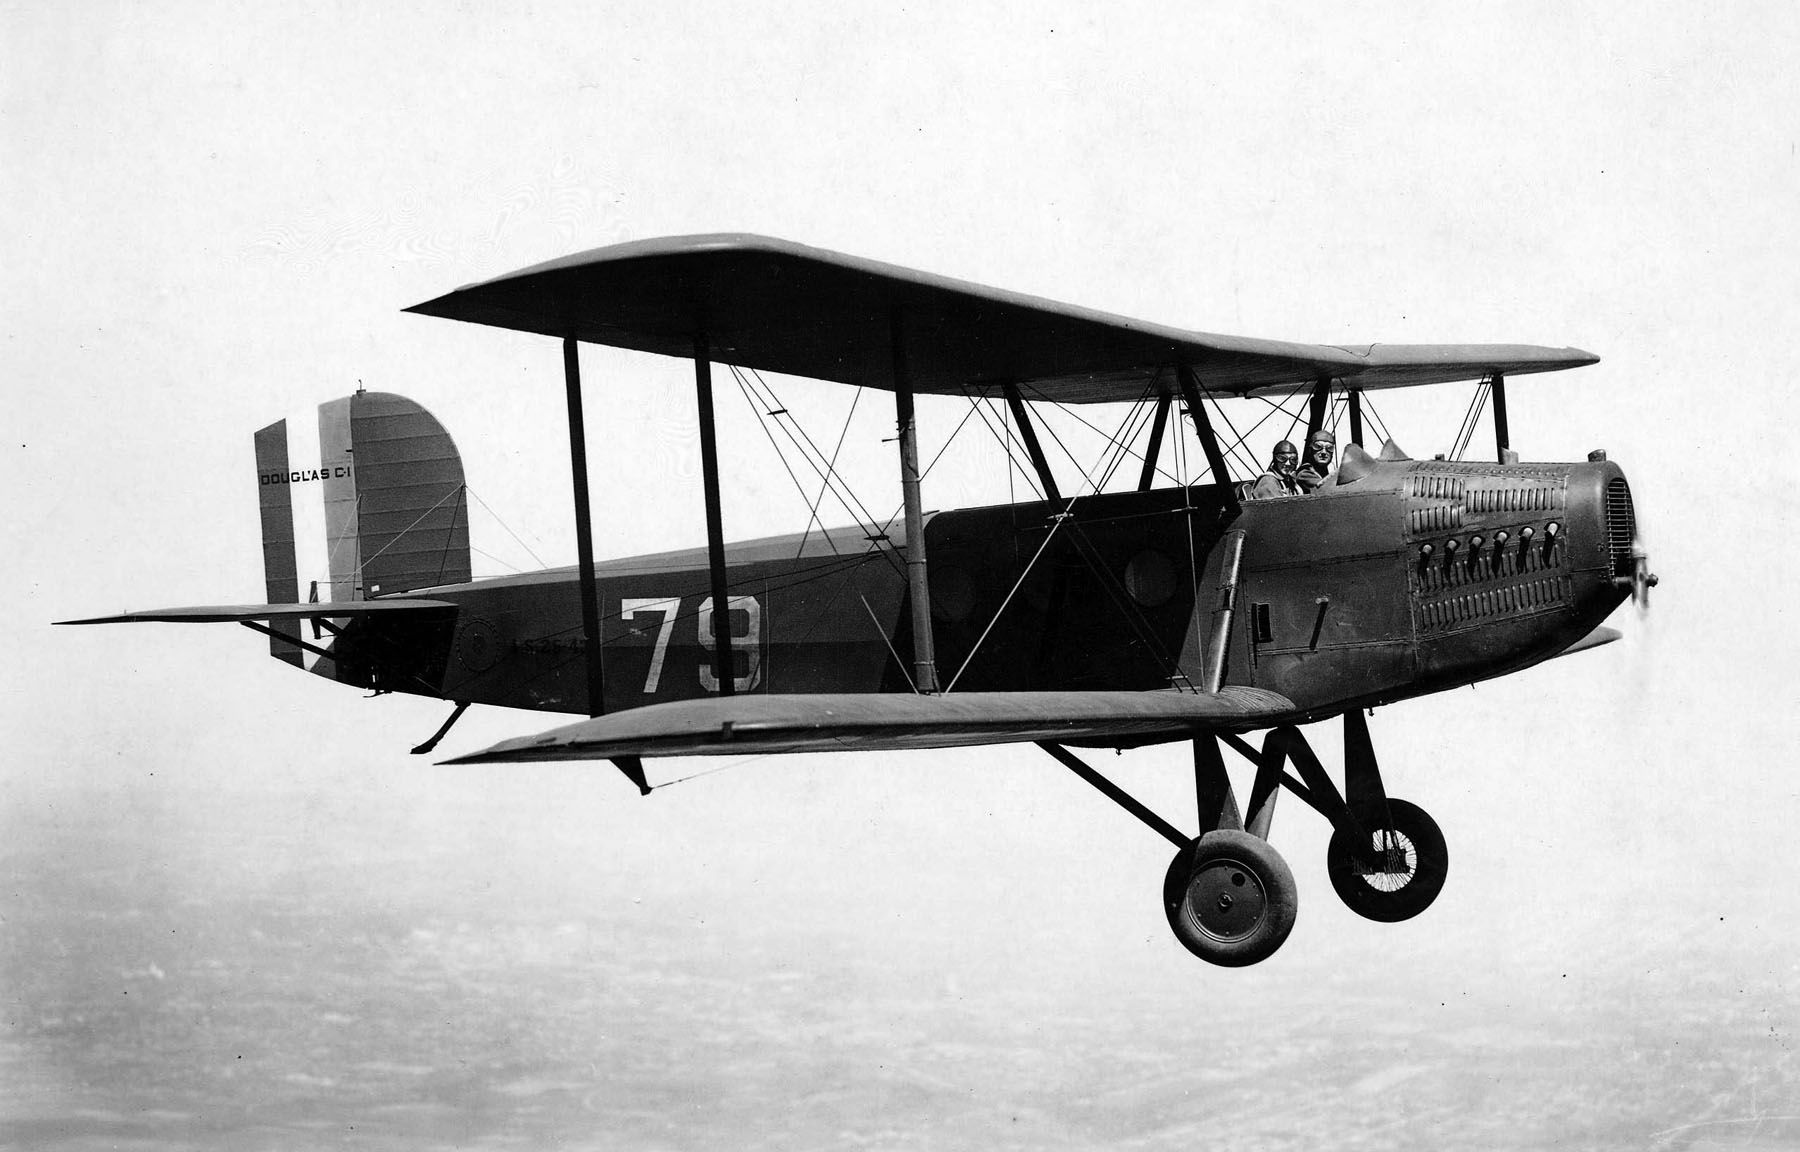 The Douglas C1 flying